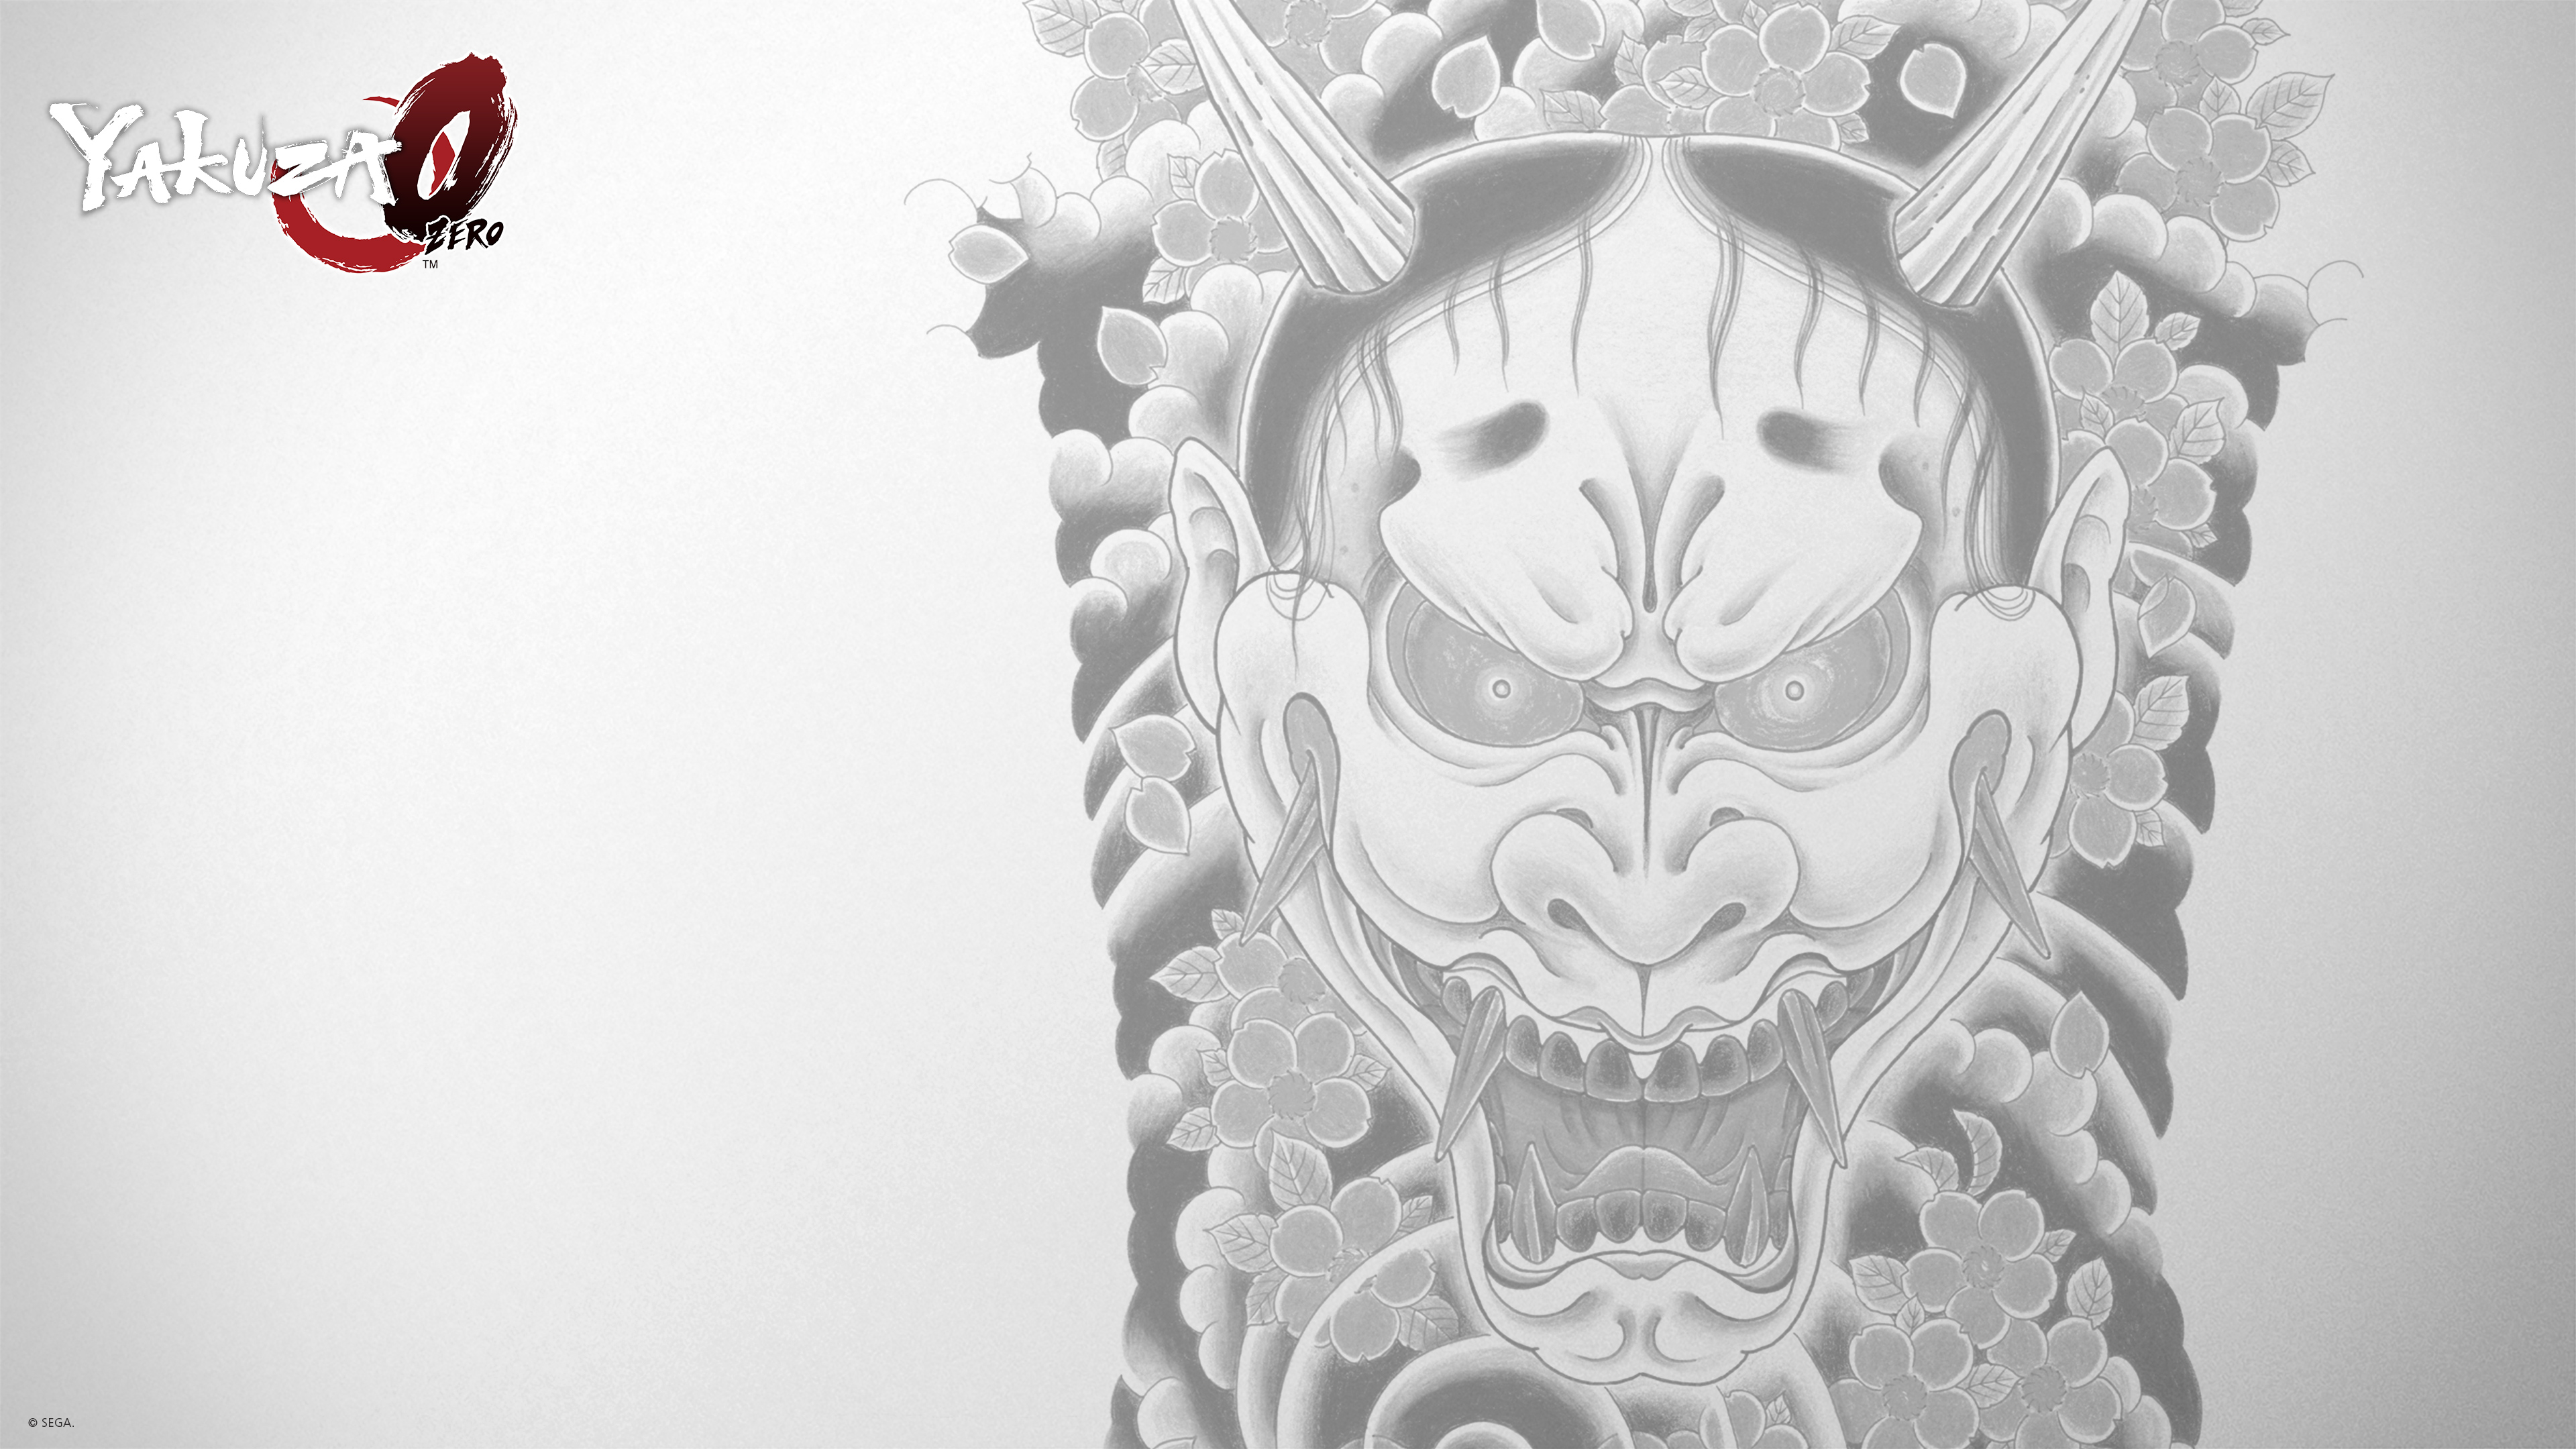 The Mad Dog Of Shimano Y0 Steam Wallpaper 2 3840x2160 Image Yakuza 0 Mod Db